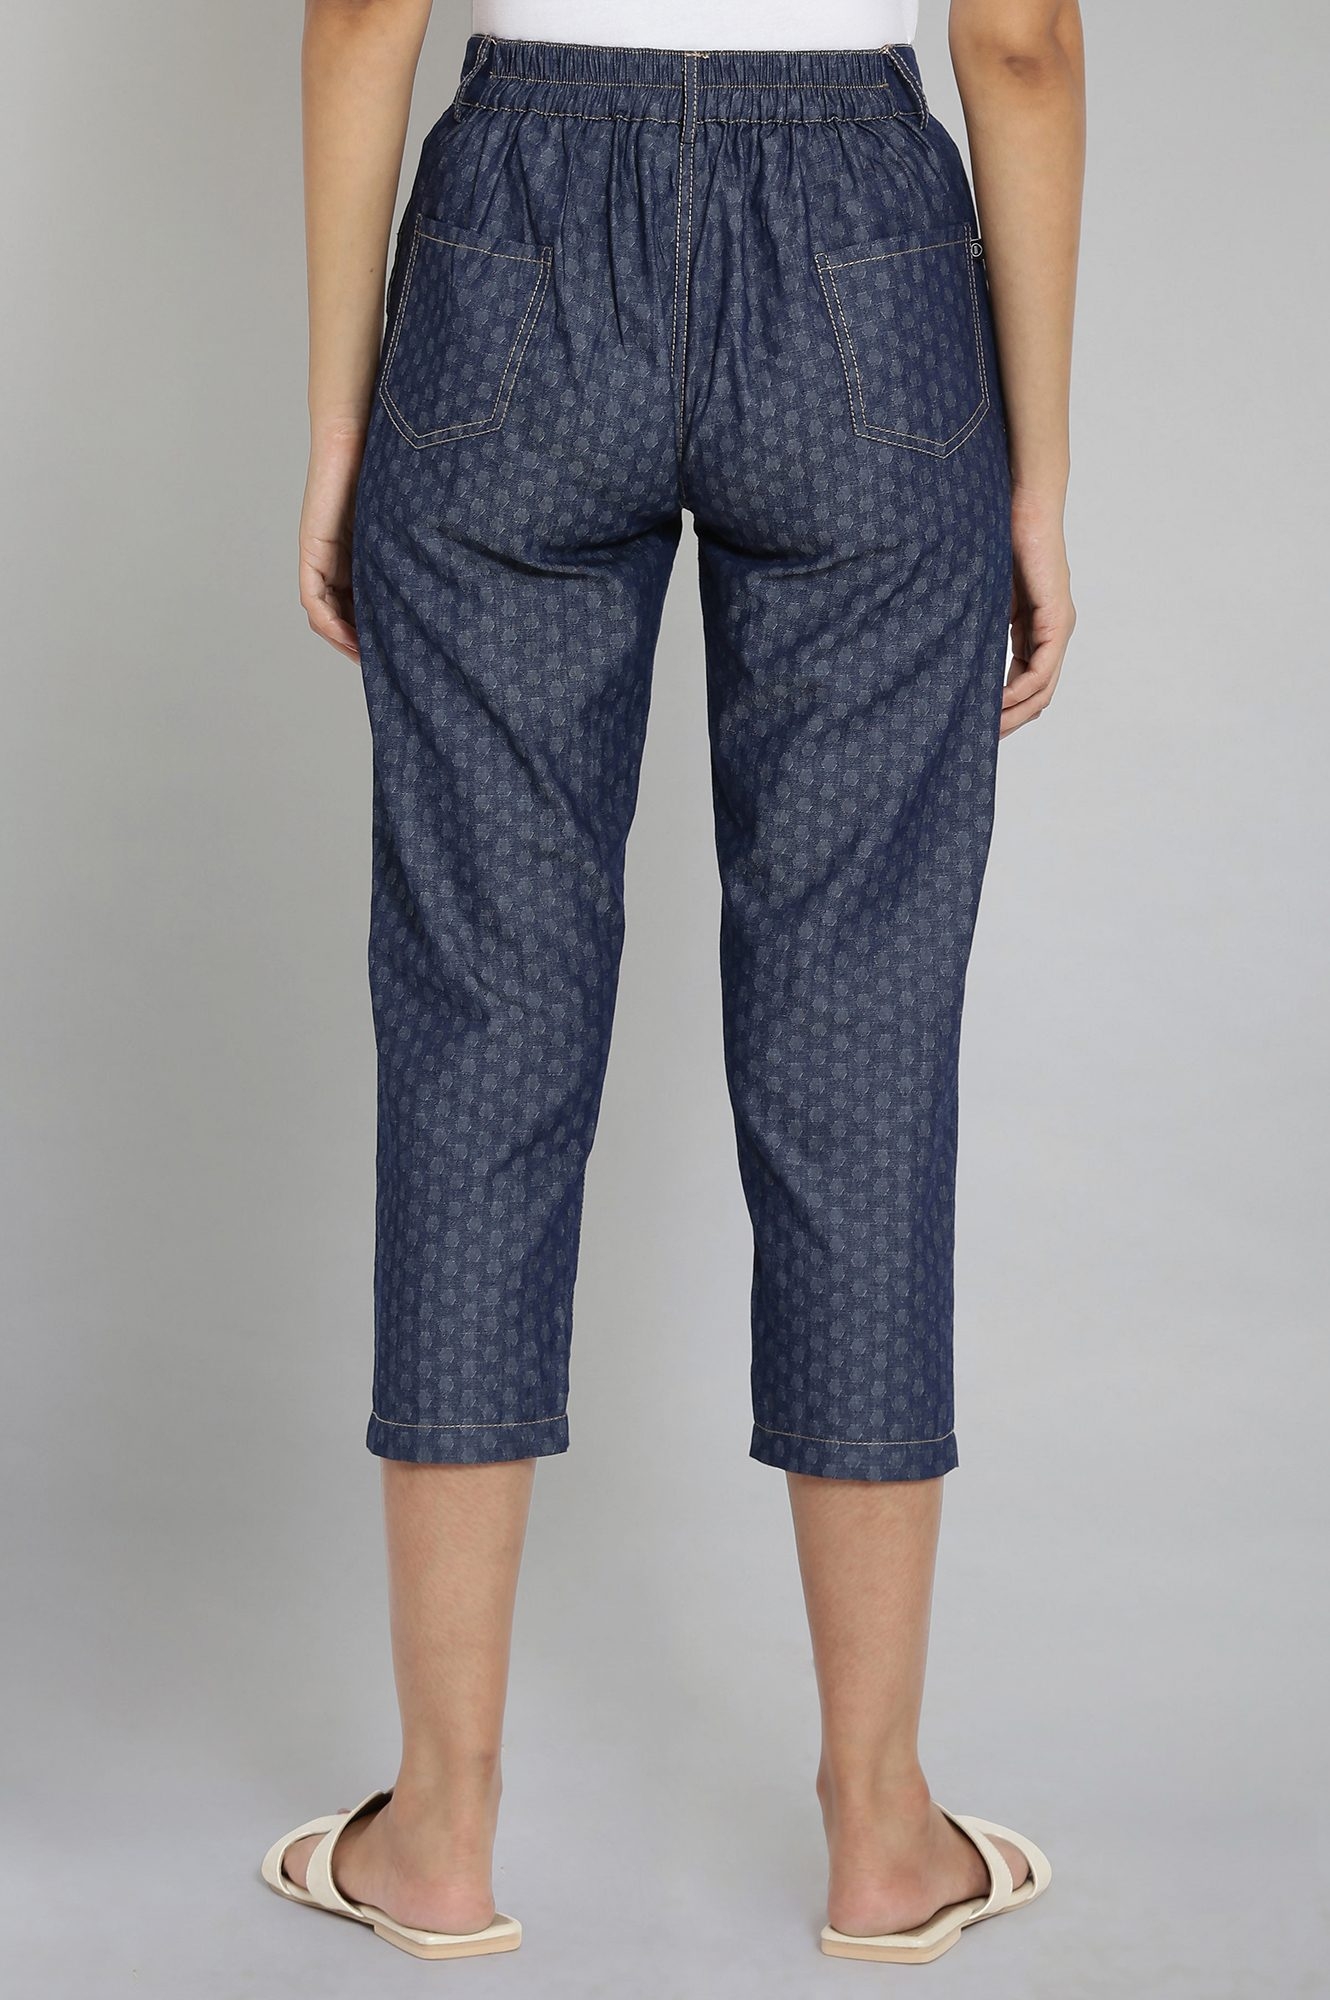 Buy Blue Pants for Women by AJIO Online | Ajio.com